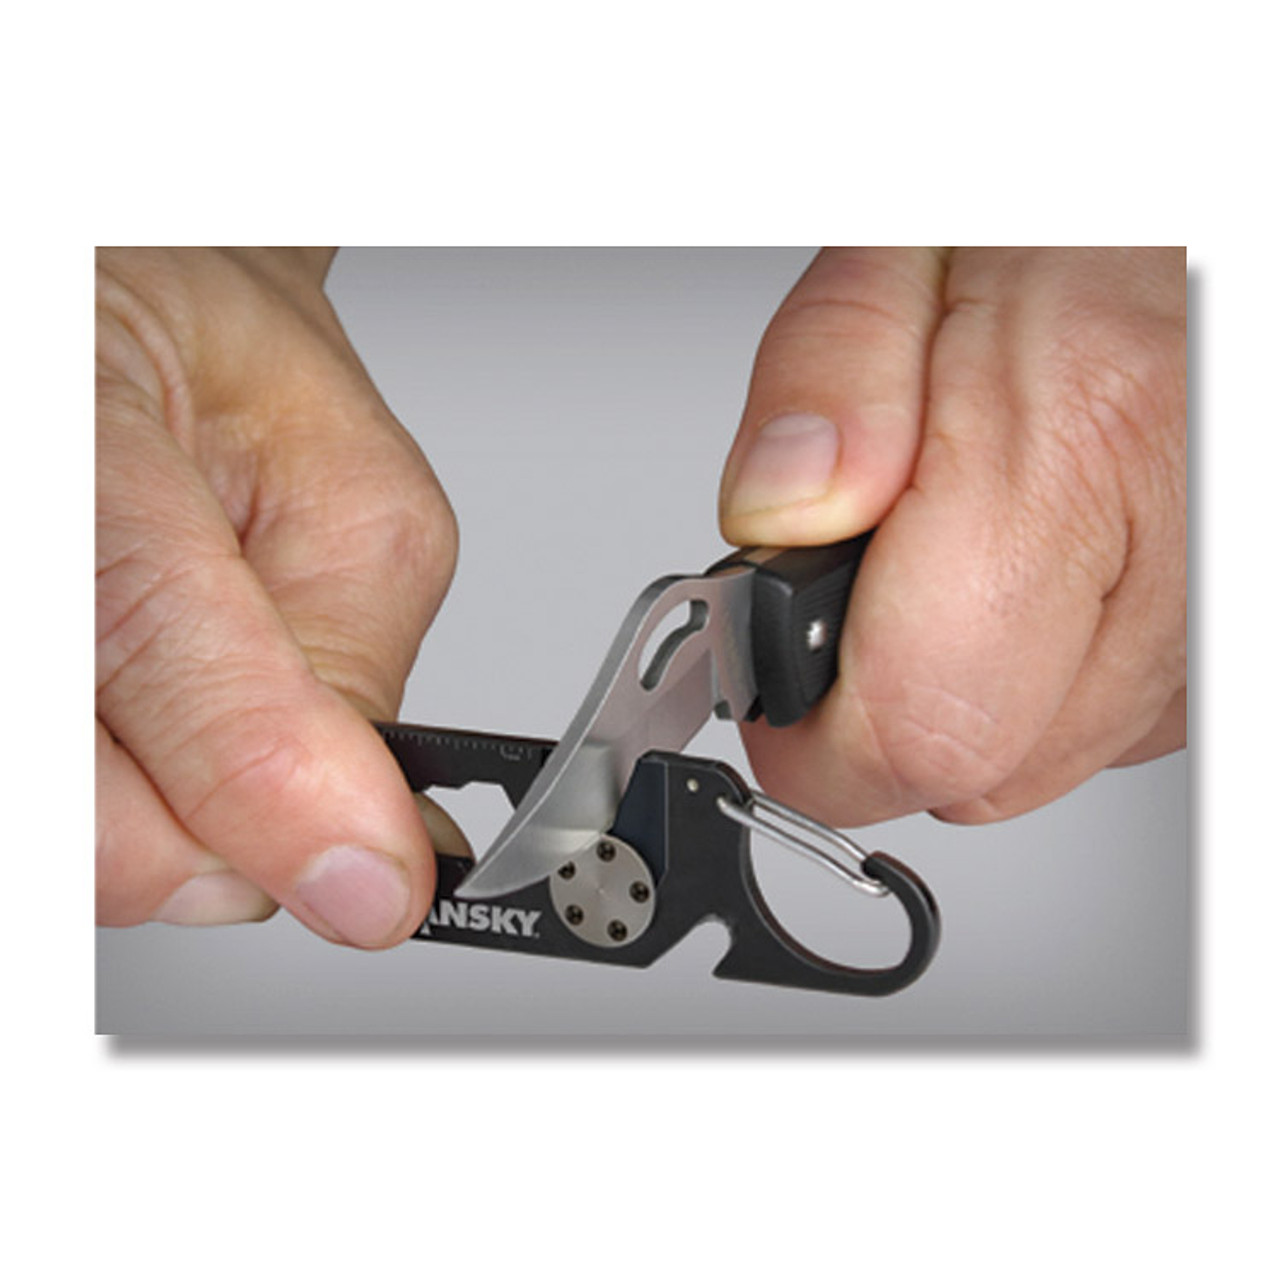 Roadie 8-in-1 Keychain Knife Sharpener